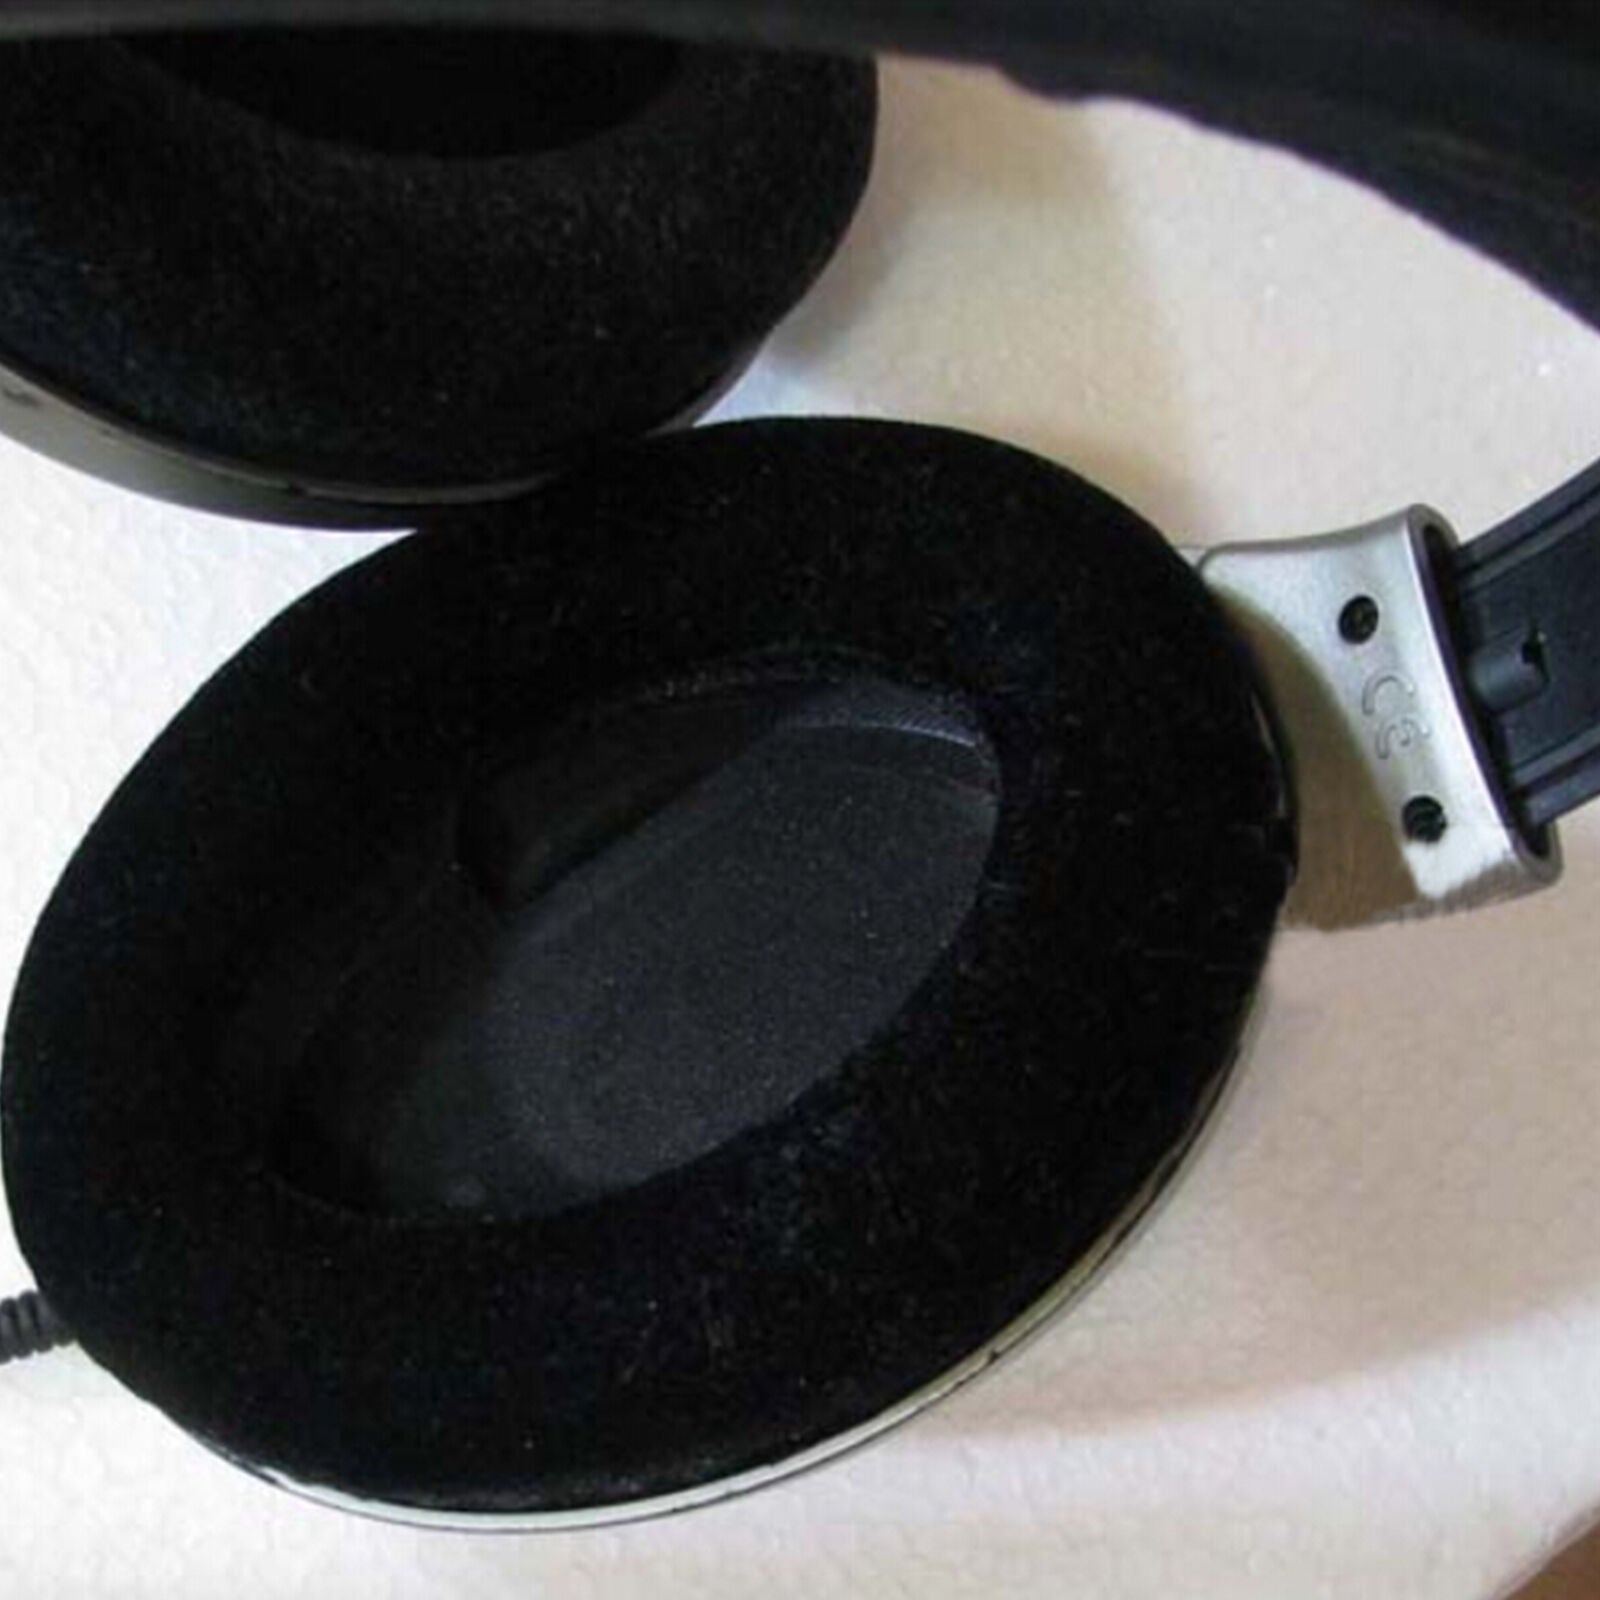 2x Comfortable Headphone Sponge Ear Pad Cushion for Sennheiser